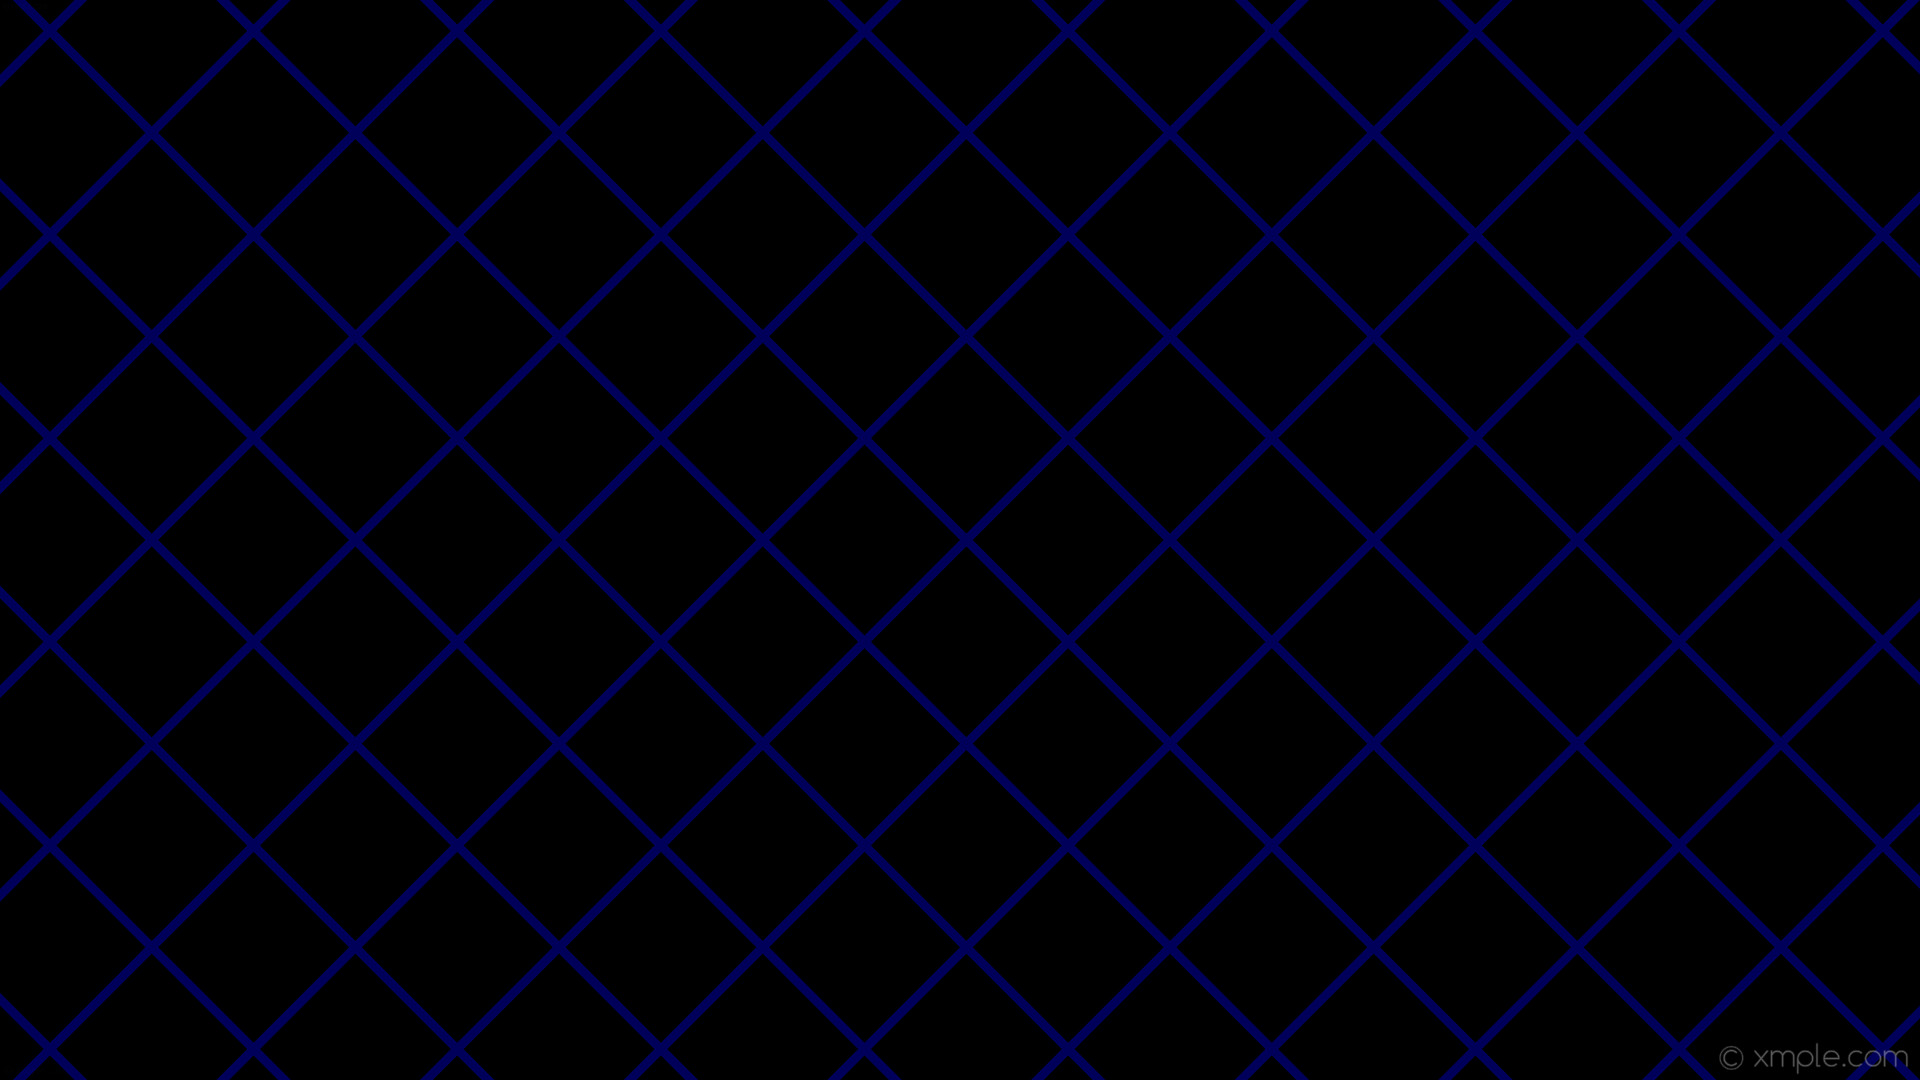 1920x1080 wallpaper graph paper blue black grid navy #000000 #000080 45Â° 9px 144px